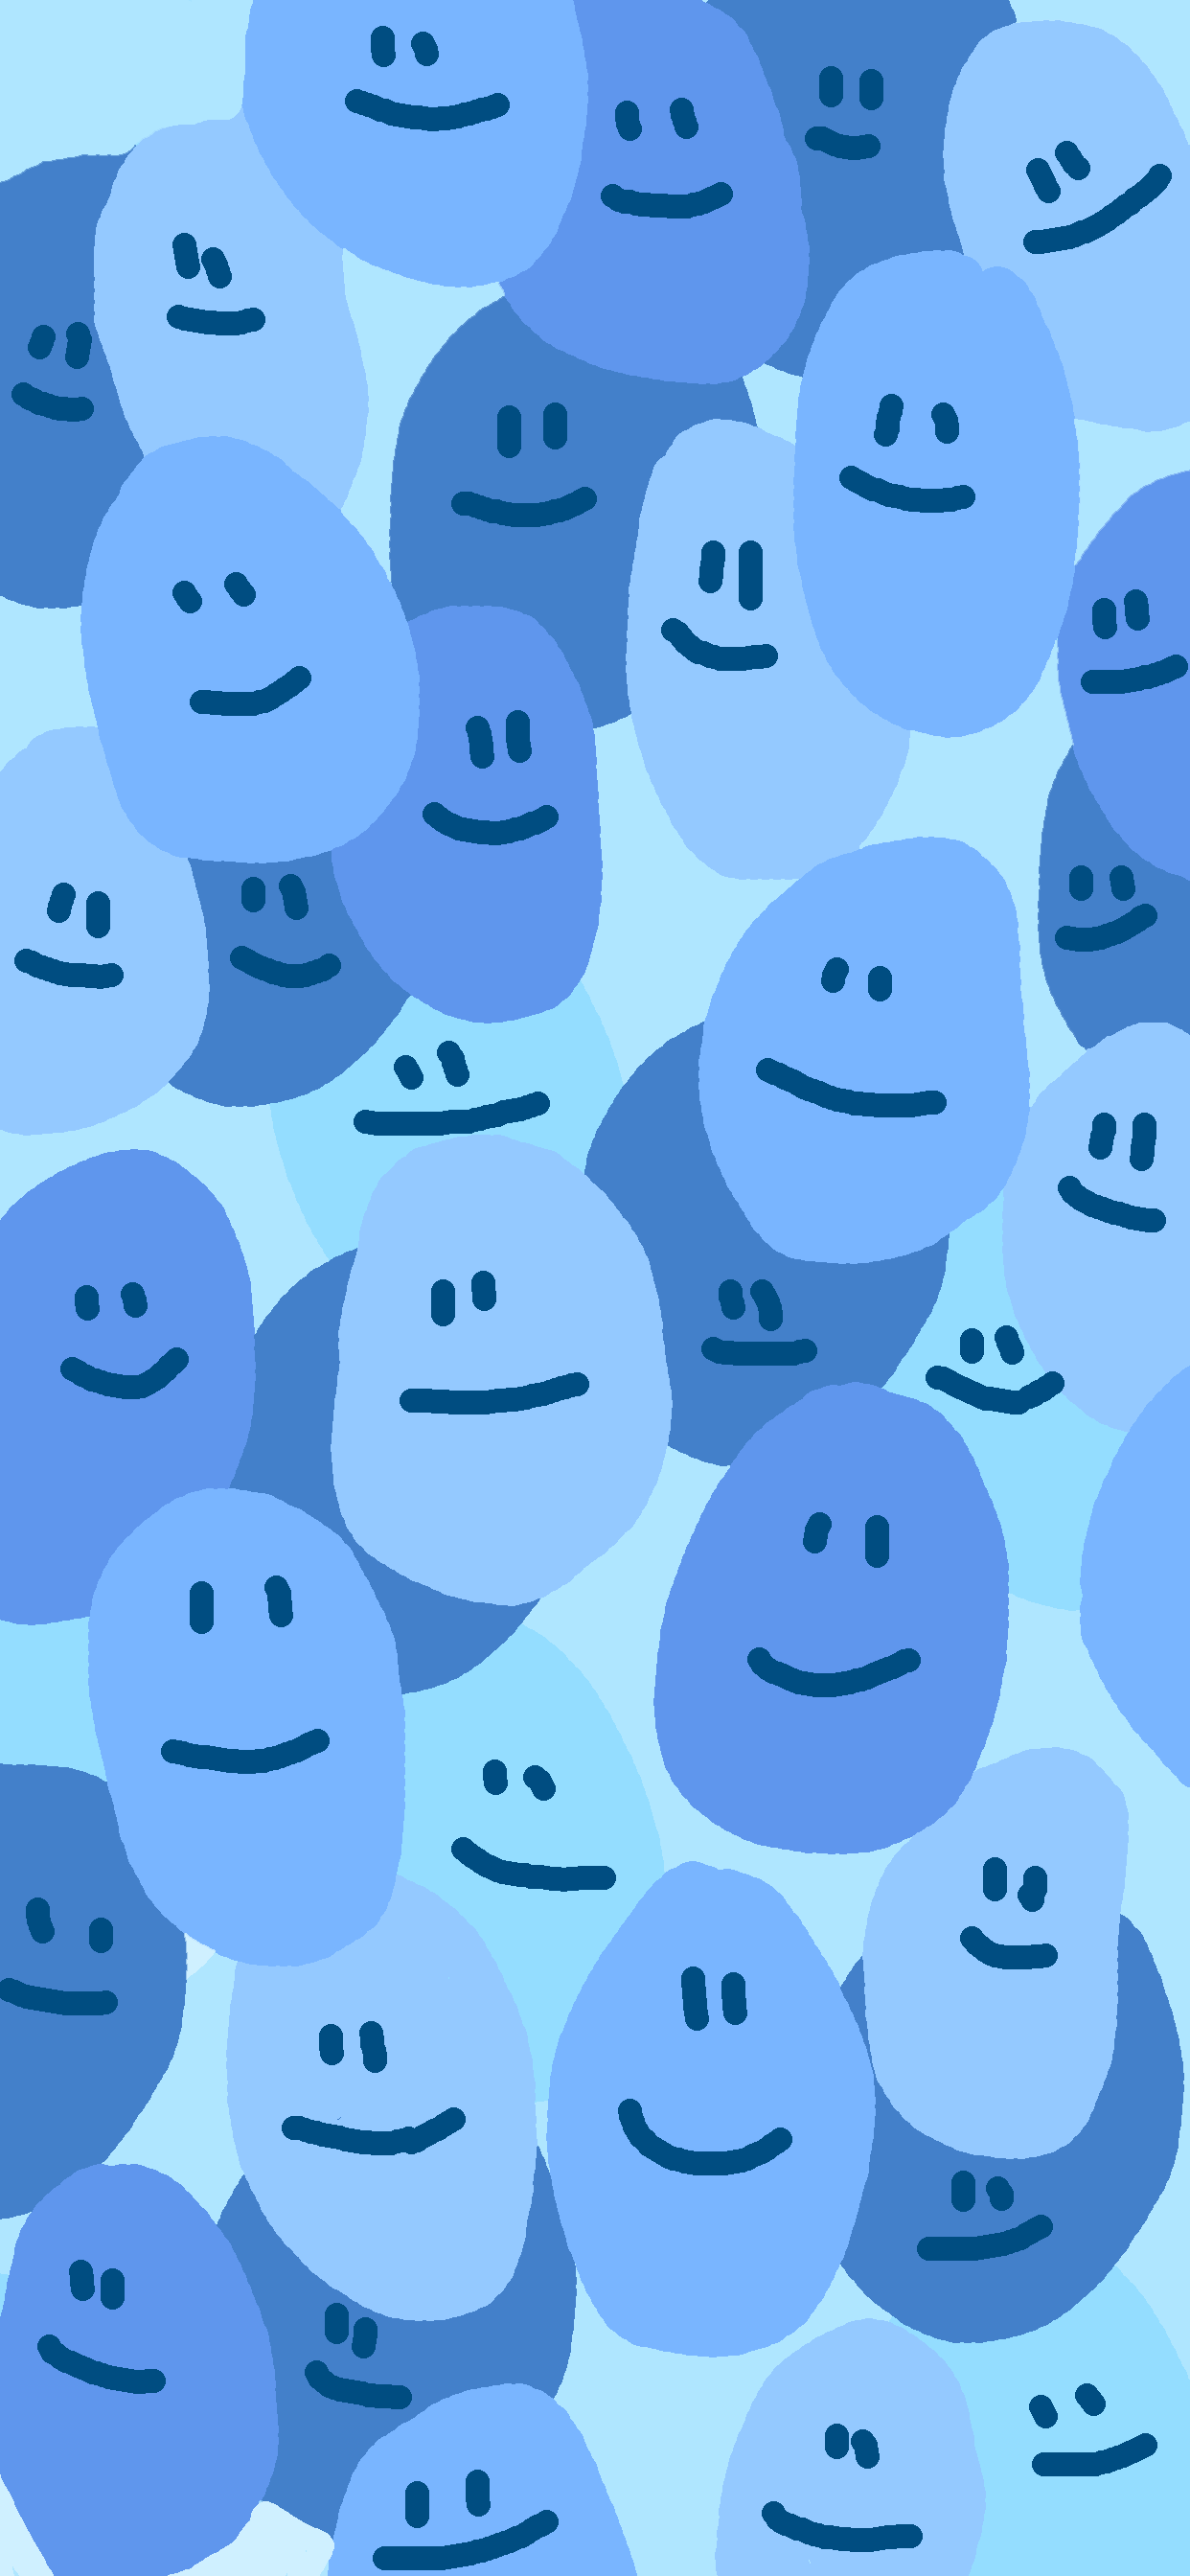 Blue Smiley Face Wallpaper. iPhone wallpaper preppy, Cute blue wallpaper, Preppy wallpaper